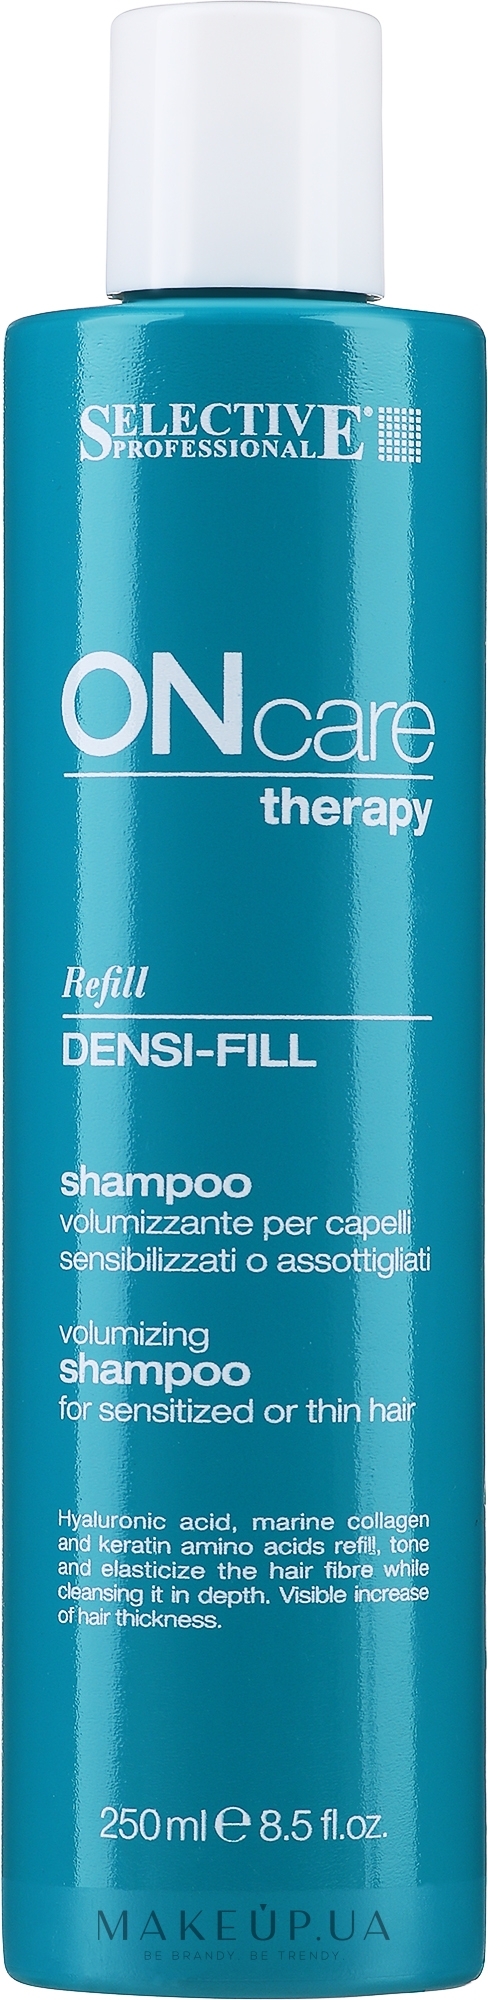 Шампунь-філер для догляду за пошкодженим або тонким волоссям - Selective Professional On Care Densi-Fill Shampoo — фото 250ml